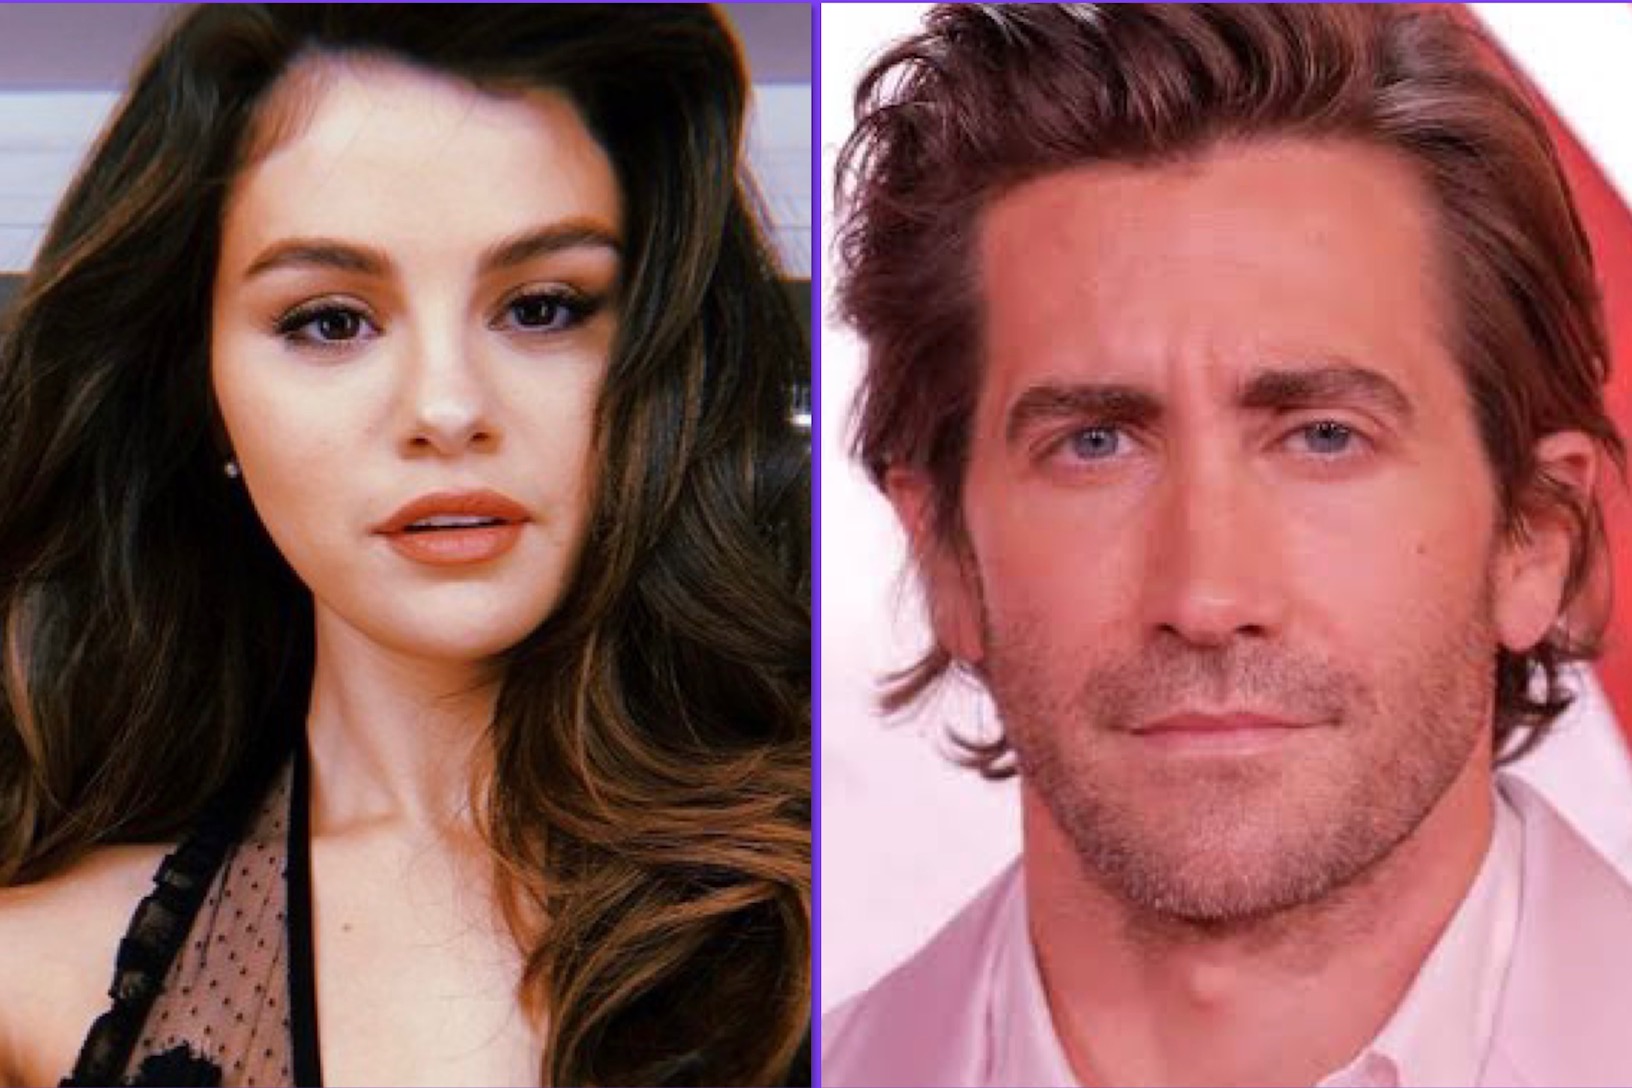 Dois reboots a caminho com Jake Gyllenhaal e Selena Gomez